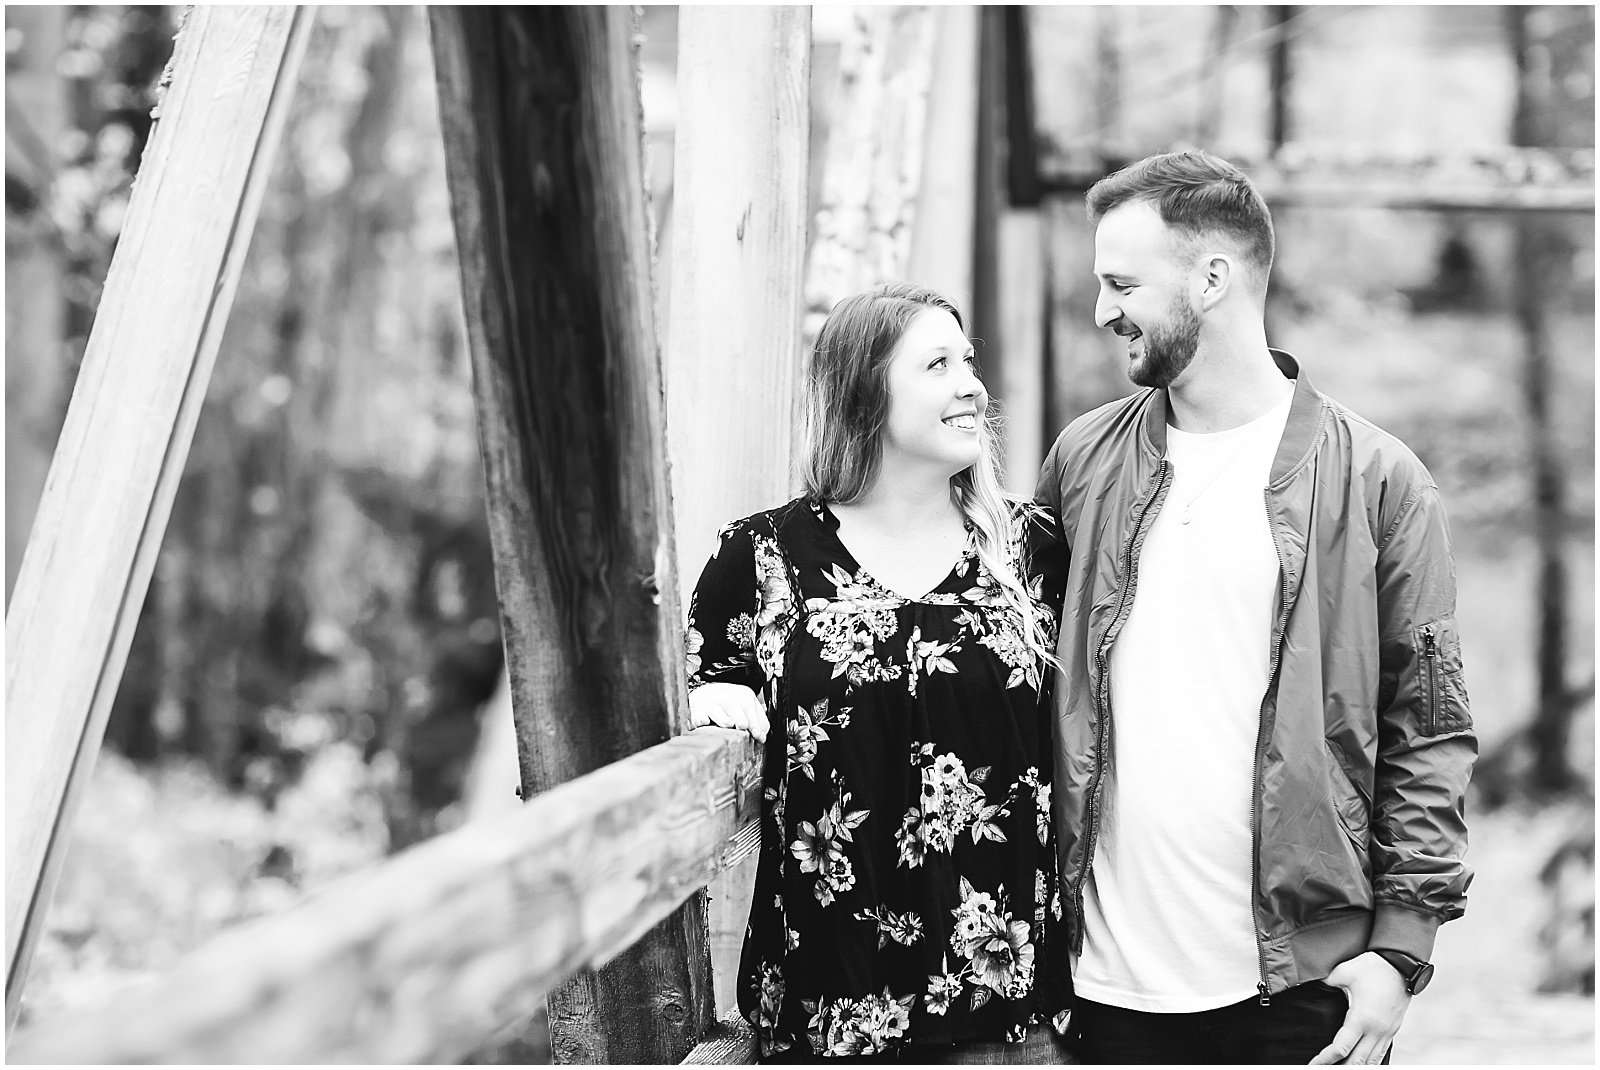 Bothell Landing Park Engagement | Jace & Brianna